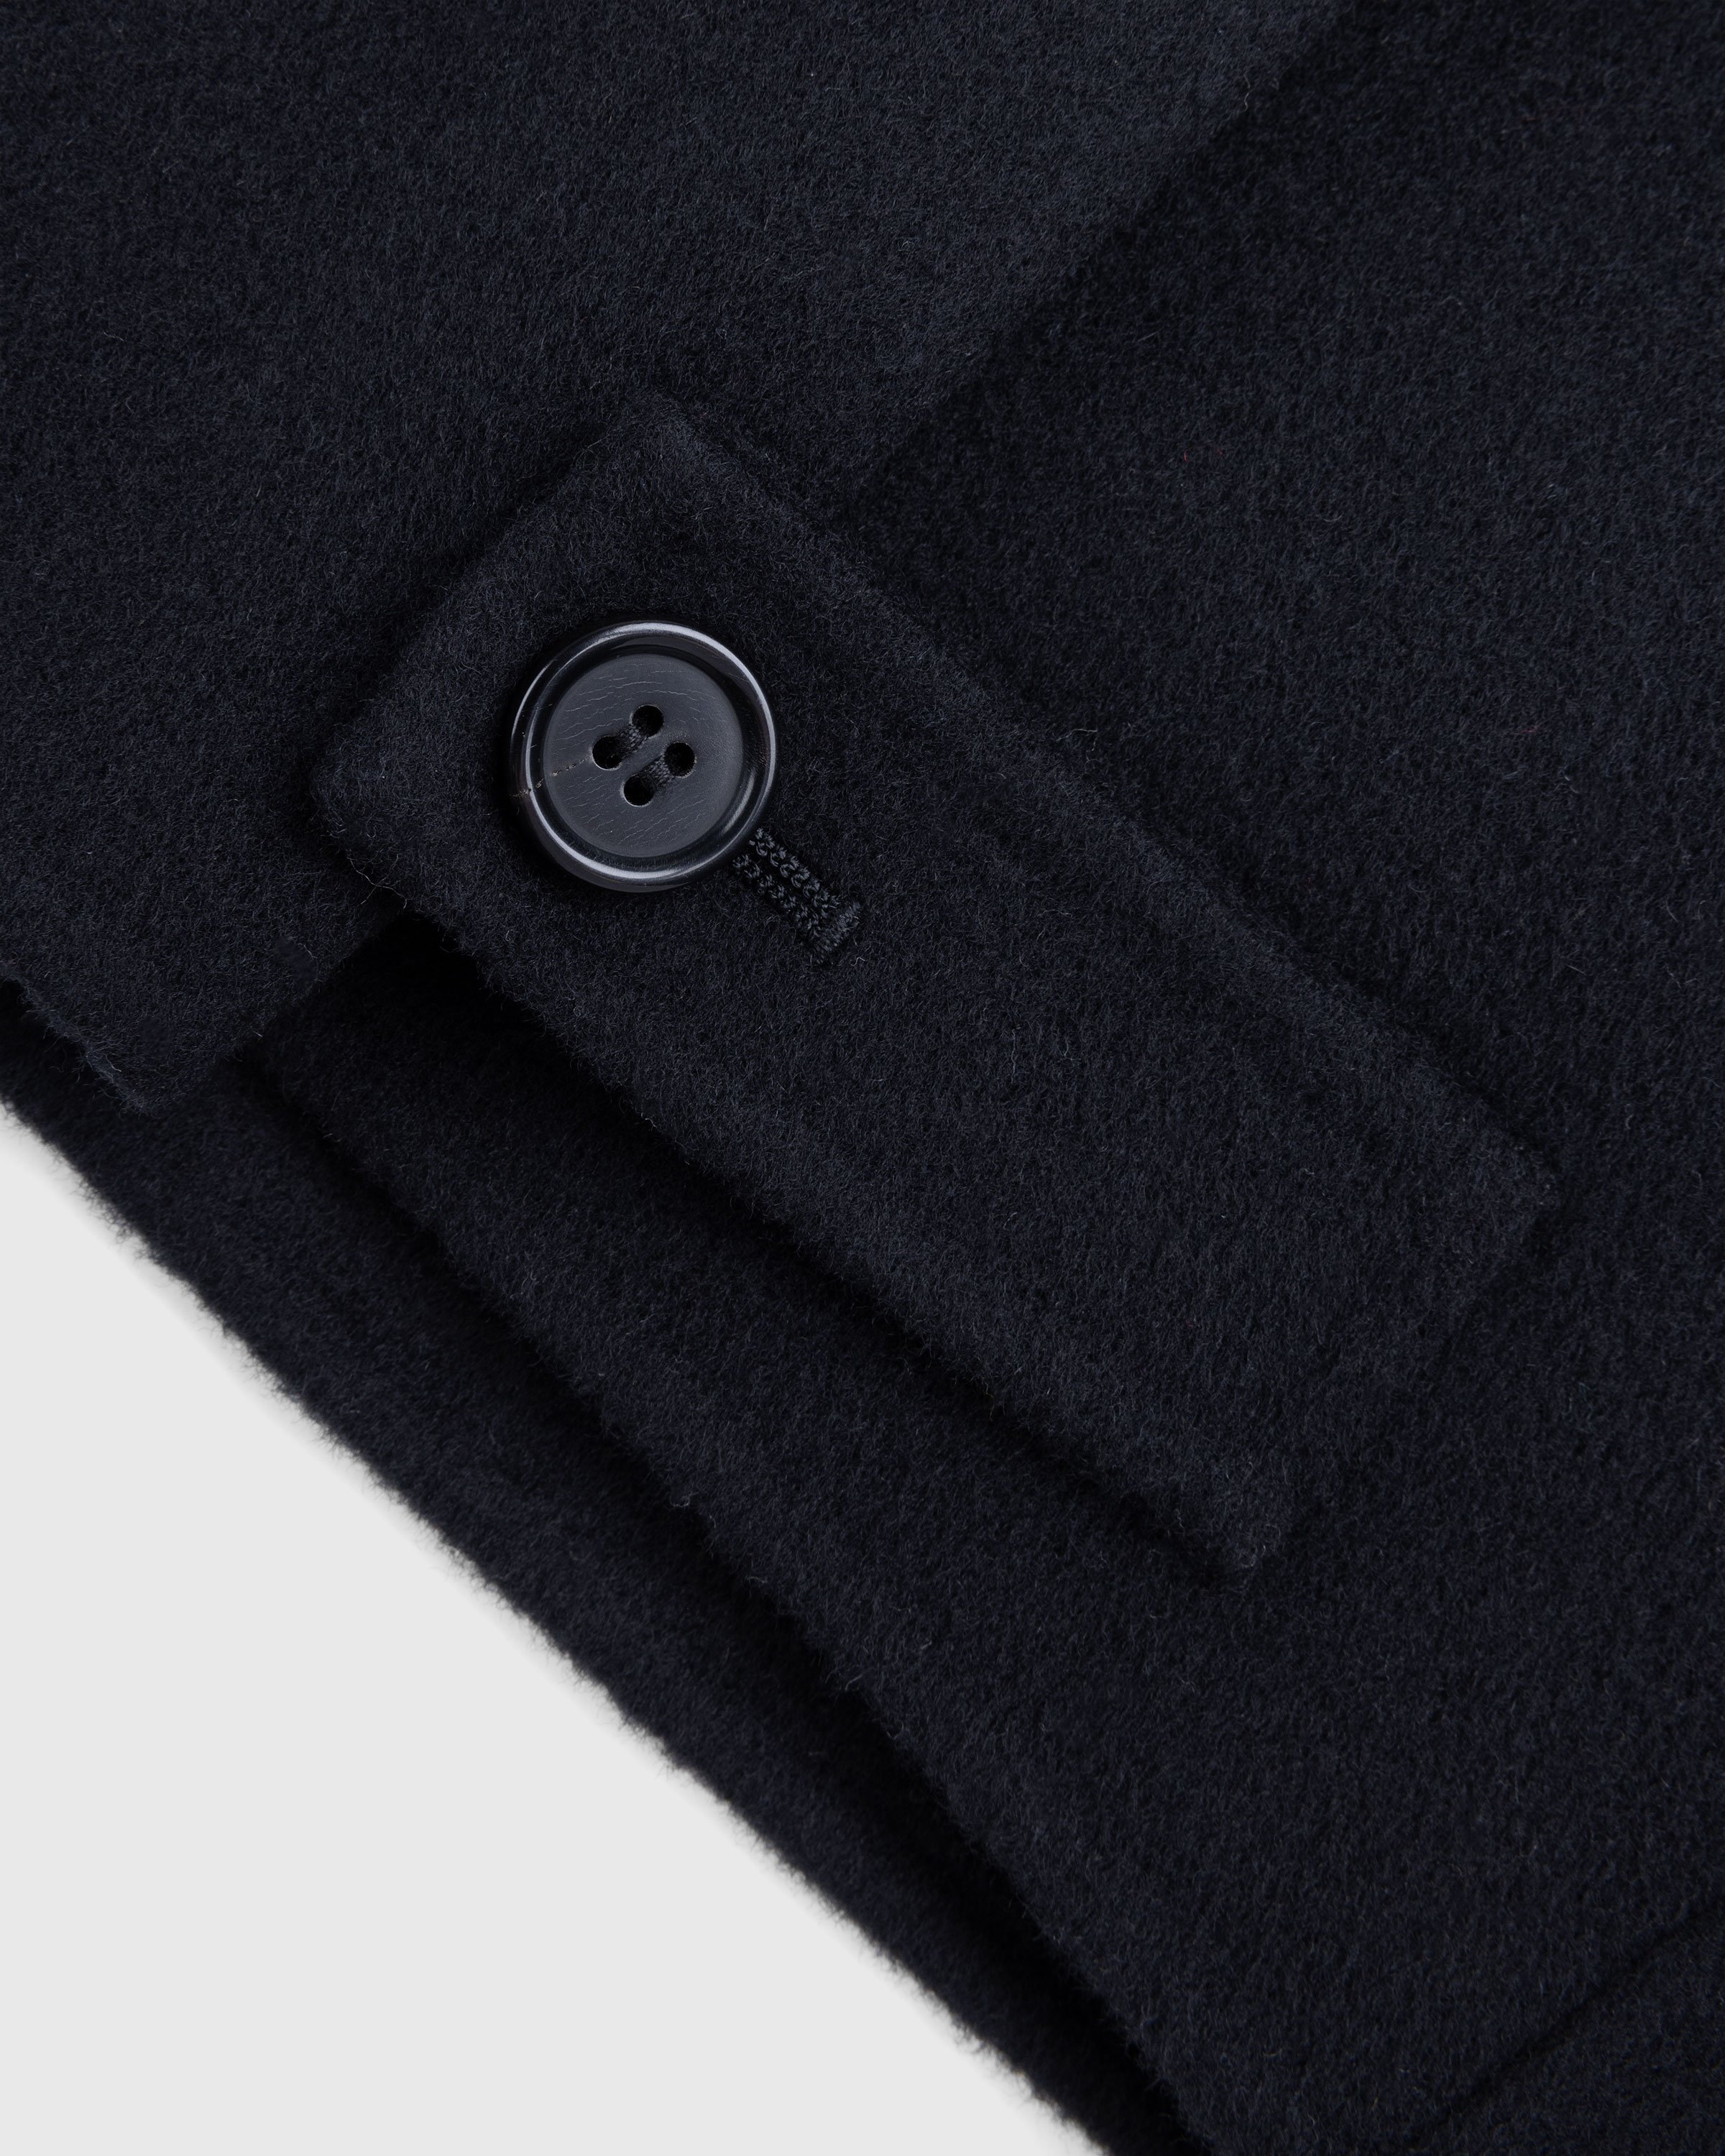 Acne Studios - Wool Zipper Jacket Black - Clothing - Black - Image 6